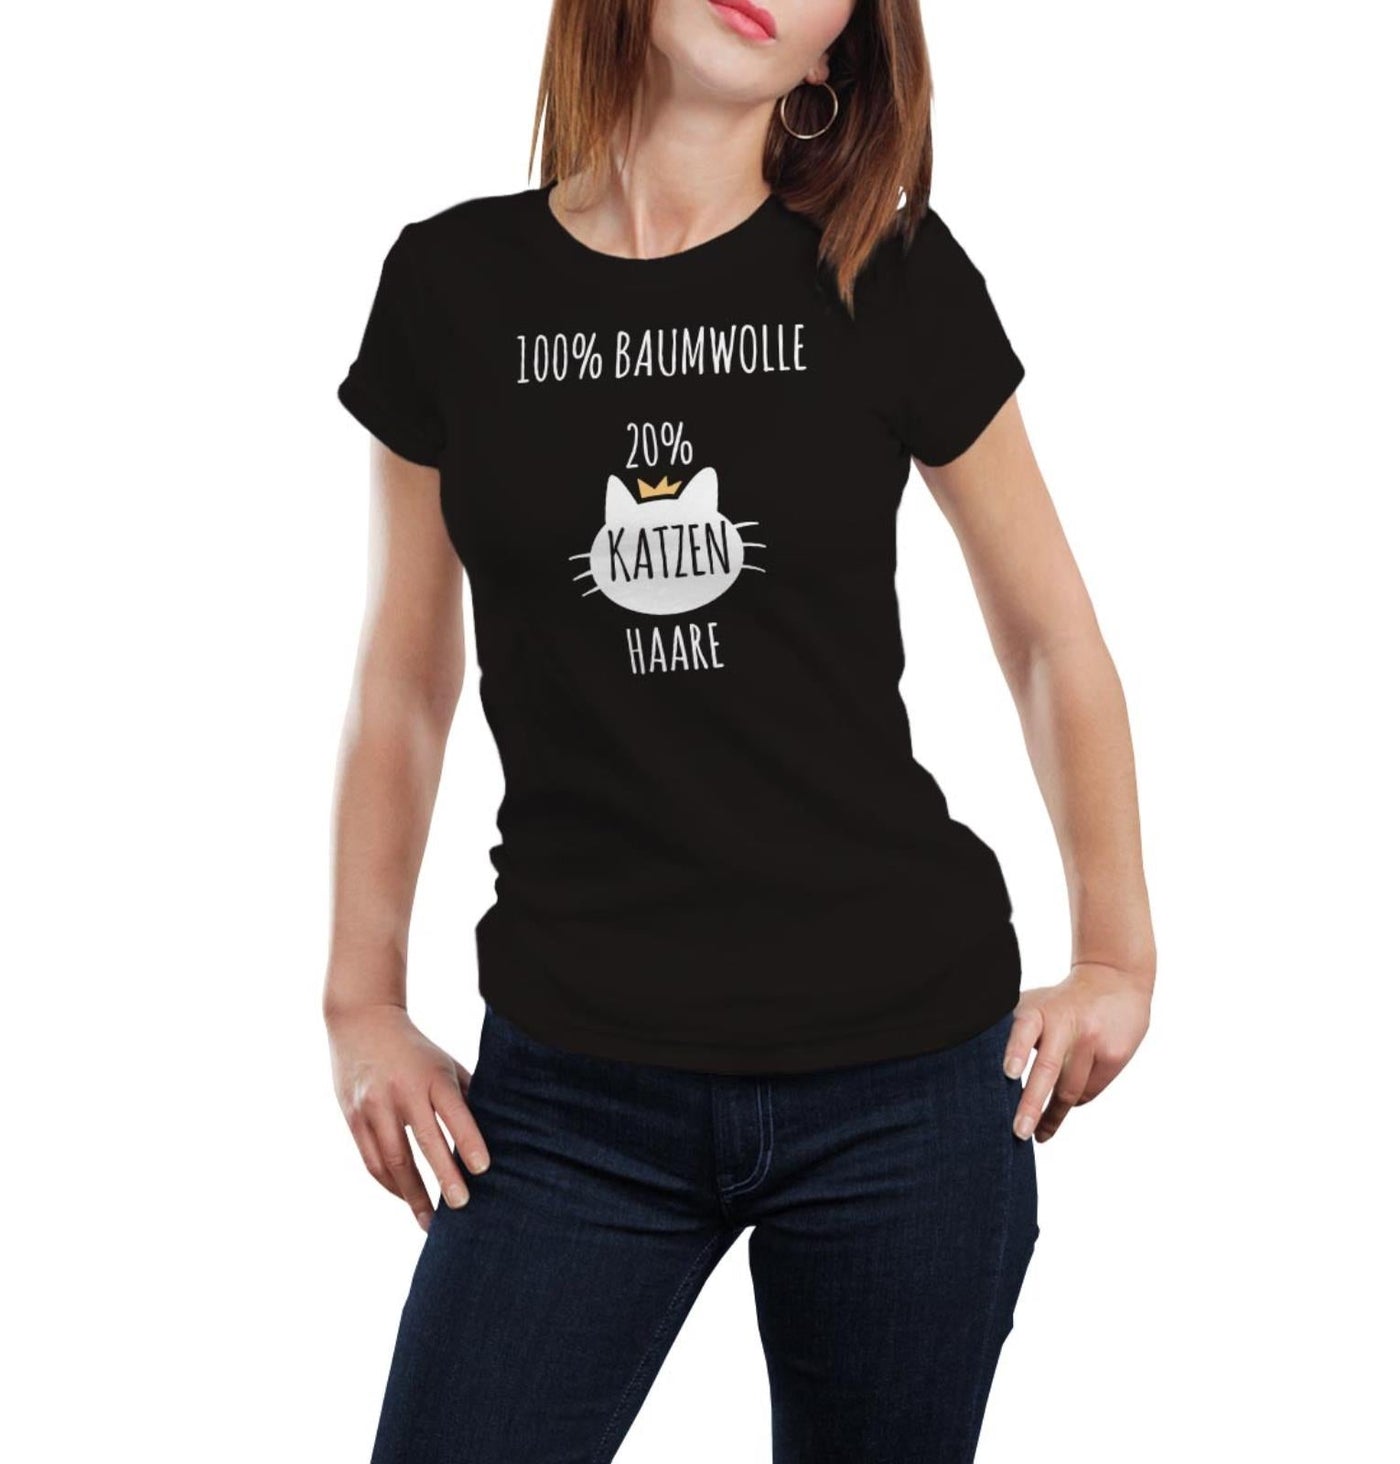 Bild: T-Shirt - 100% Baumwolle 20% Katzenhaare Geschenkidee